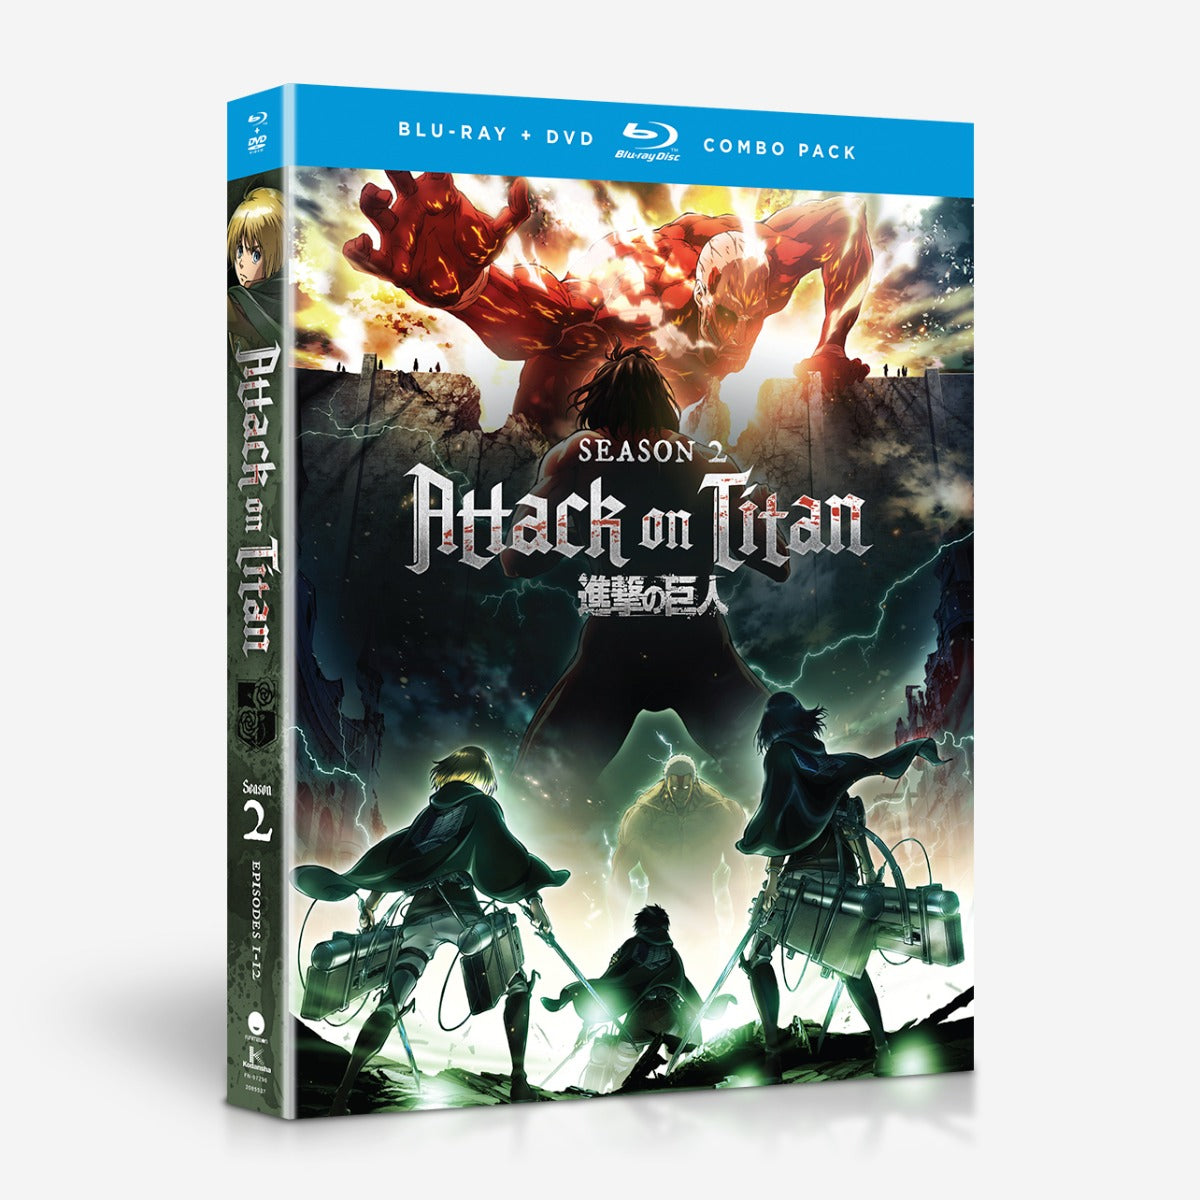 Attack on Titan - Season 2 - Blu-ray + DVD image count 0